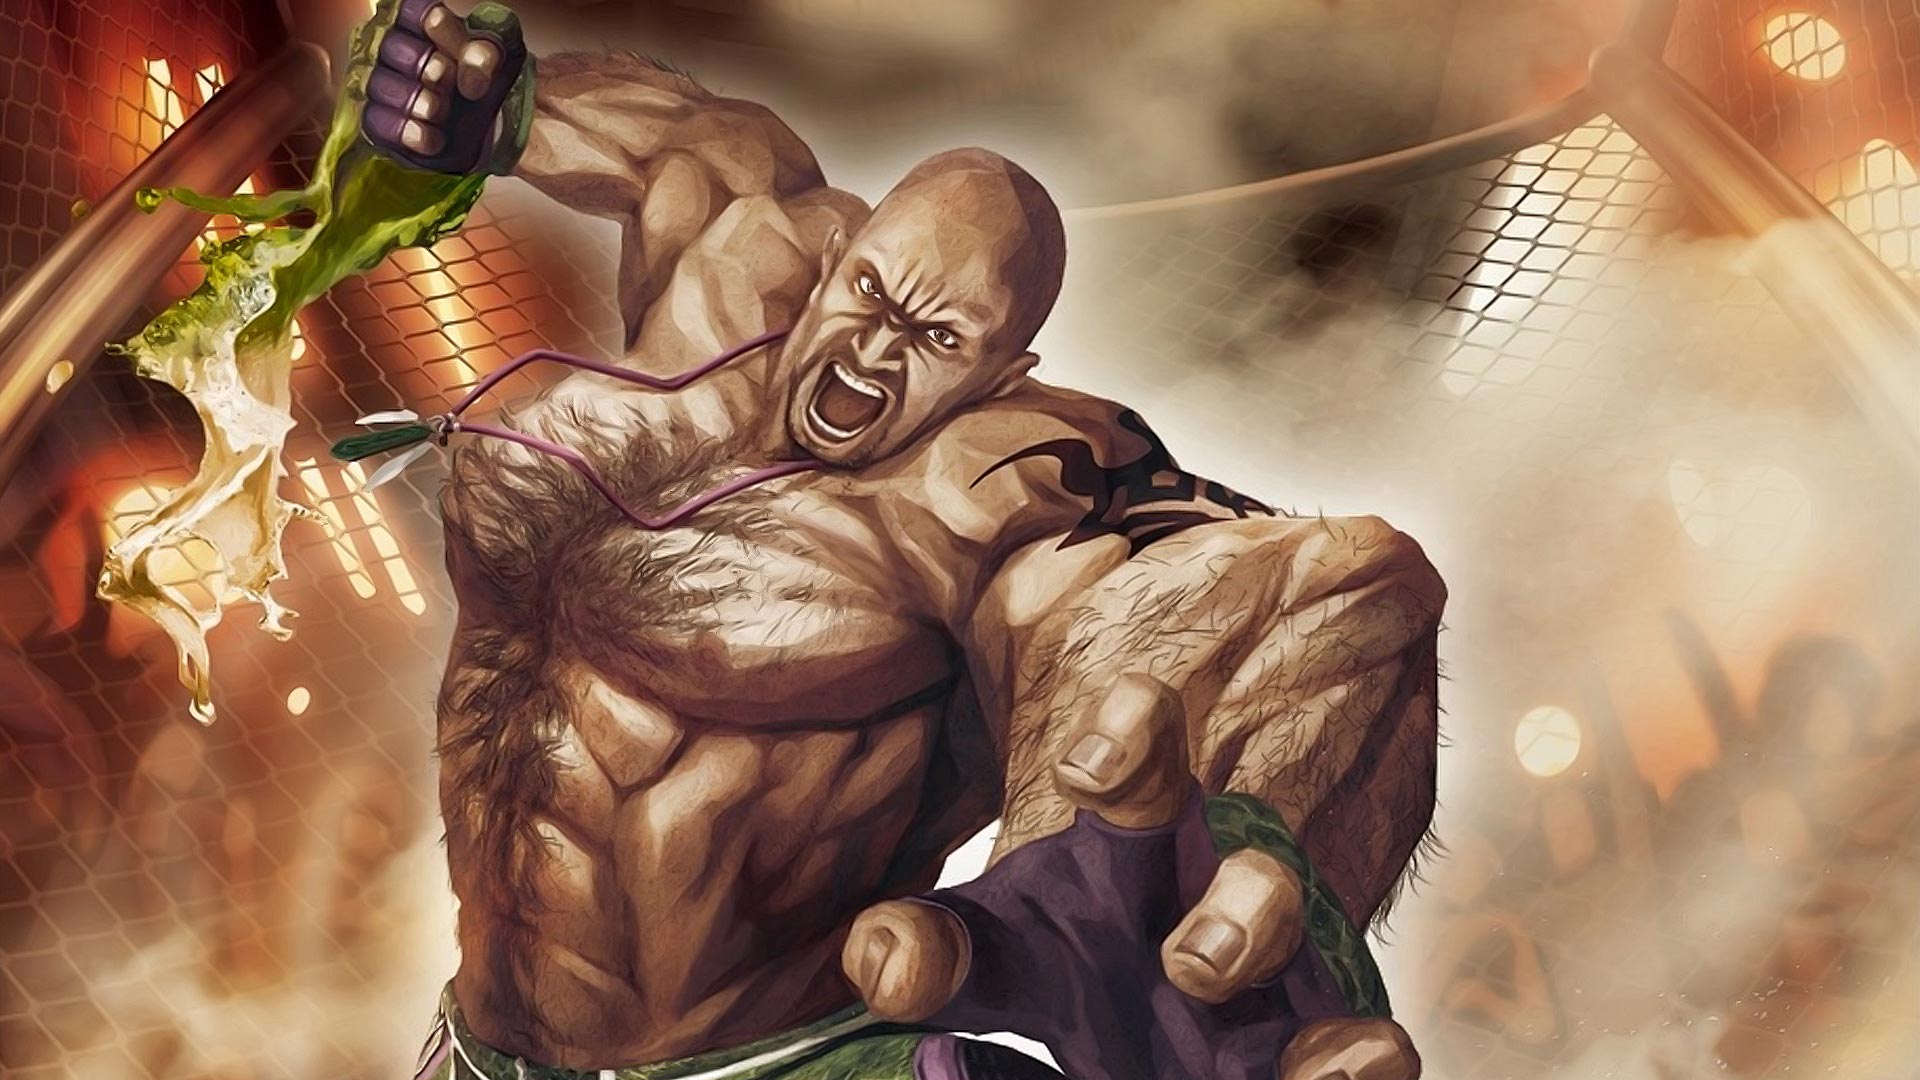 Descarga gratuita de fondo de pantalla para móvil de Street Fighter X Tekken, Luchador Callejero, Videojuego.